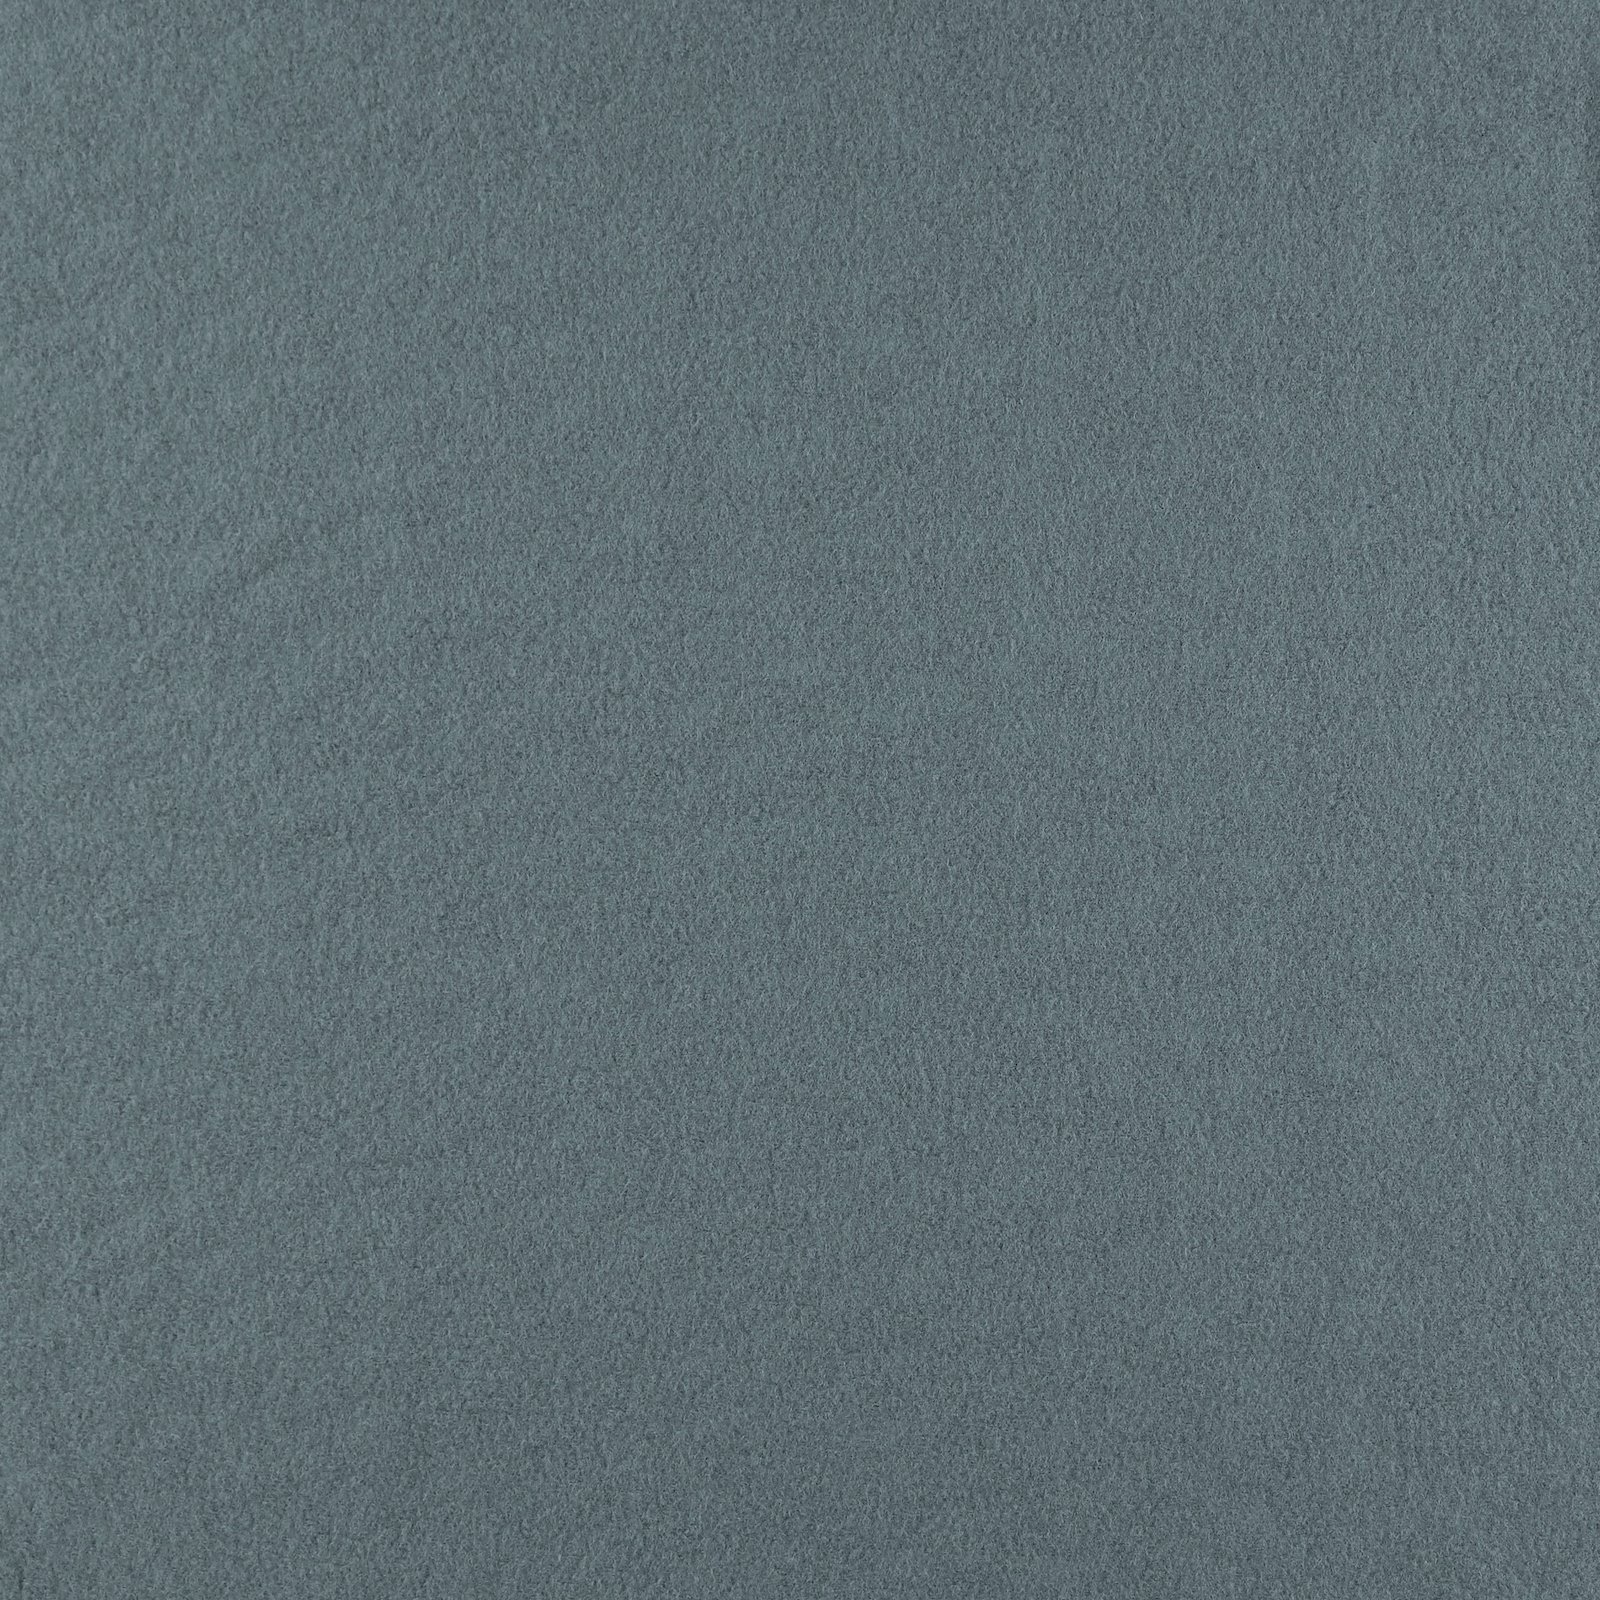 Wool felt dusty blue melange 310410_pack_solid